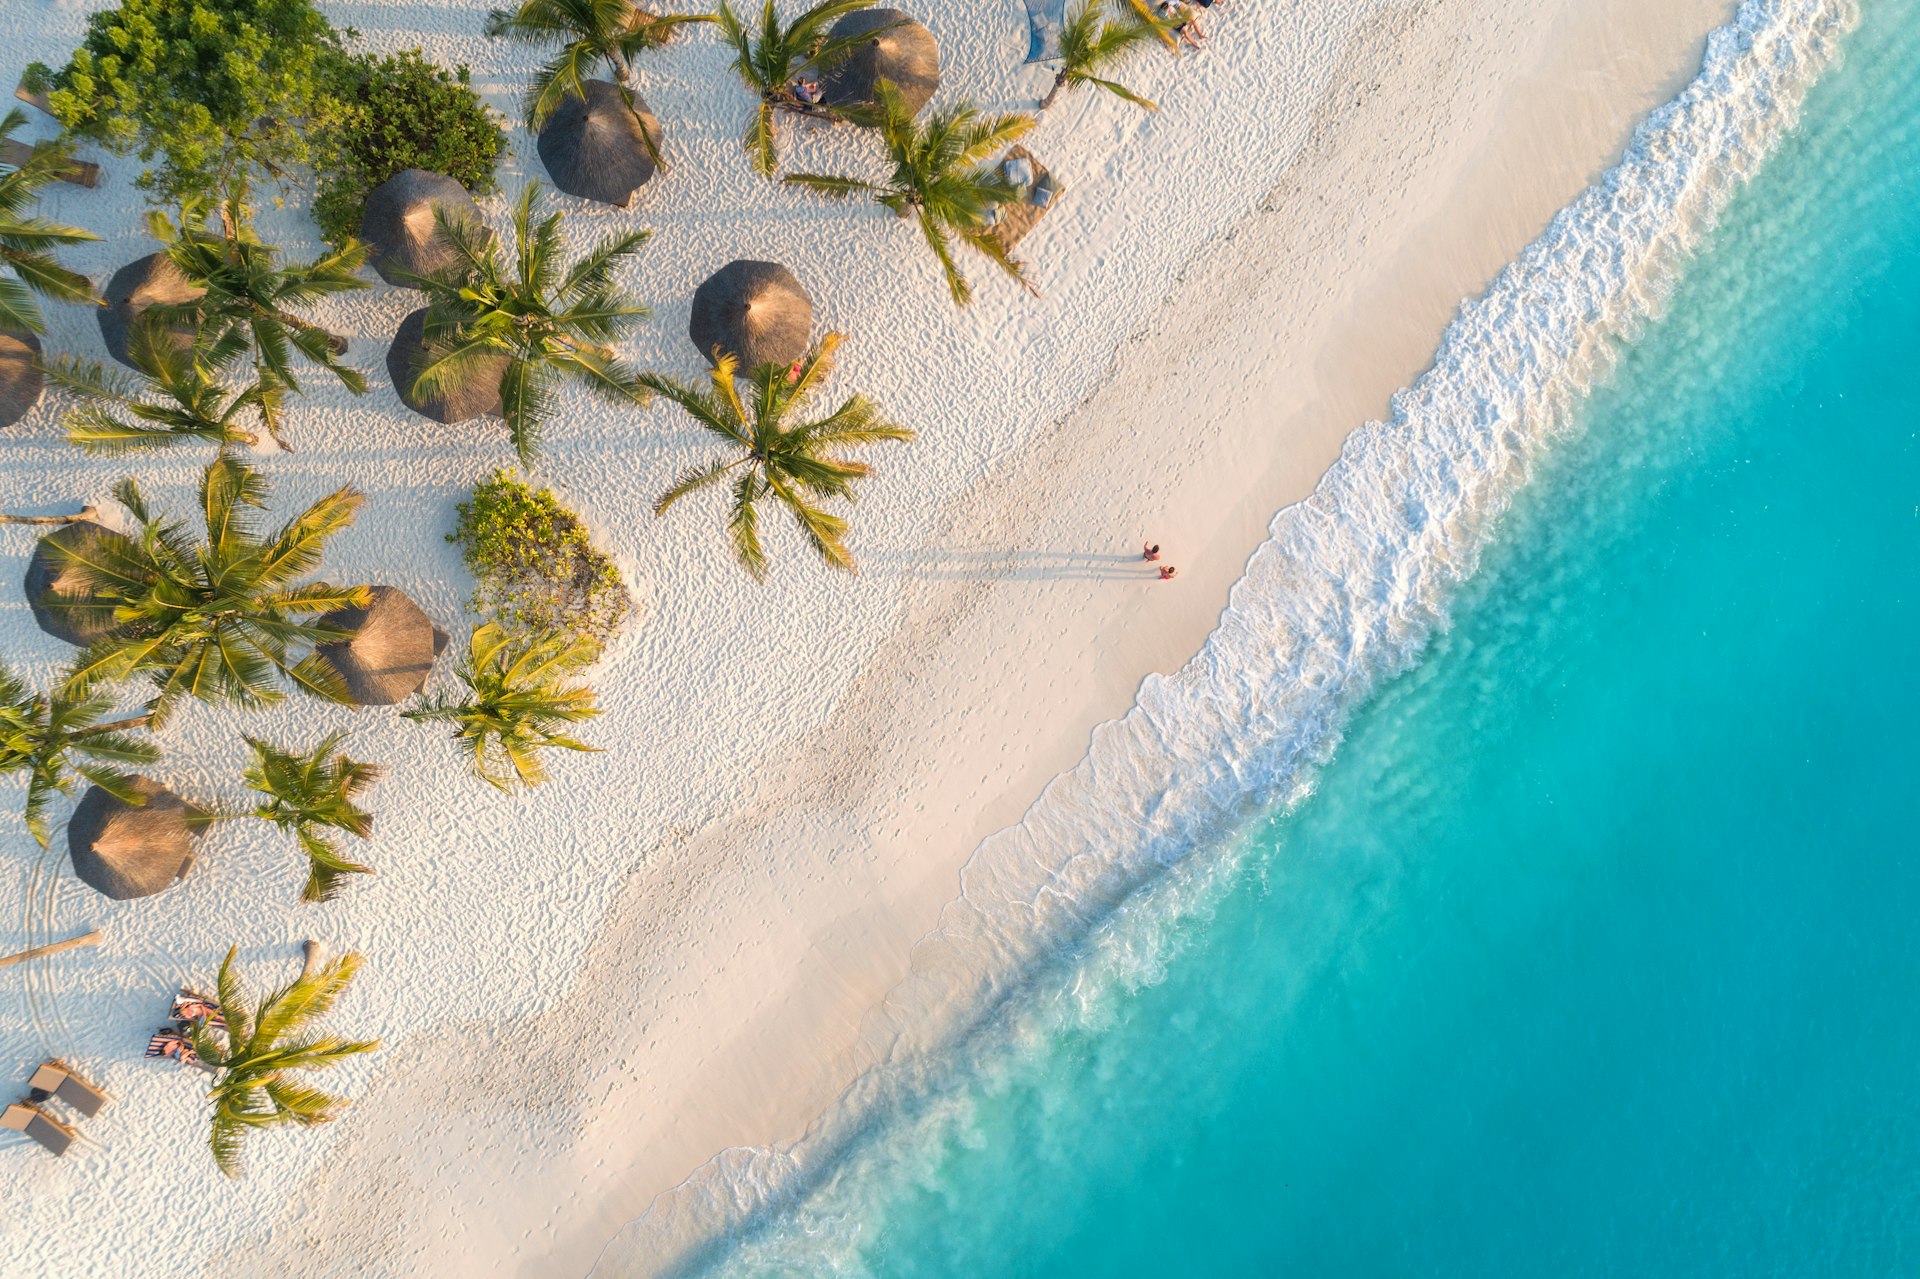 Aerial view of umbrellas and palms on a sandy beach in Zanzibar, Africa.